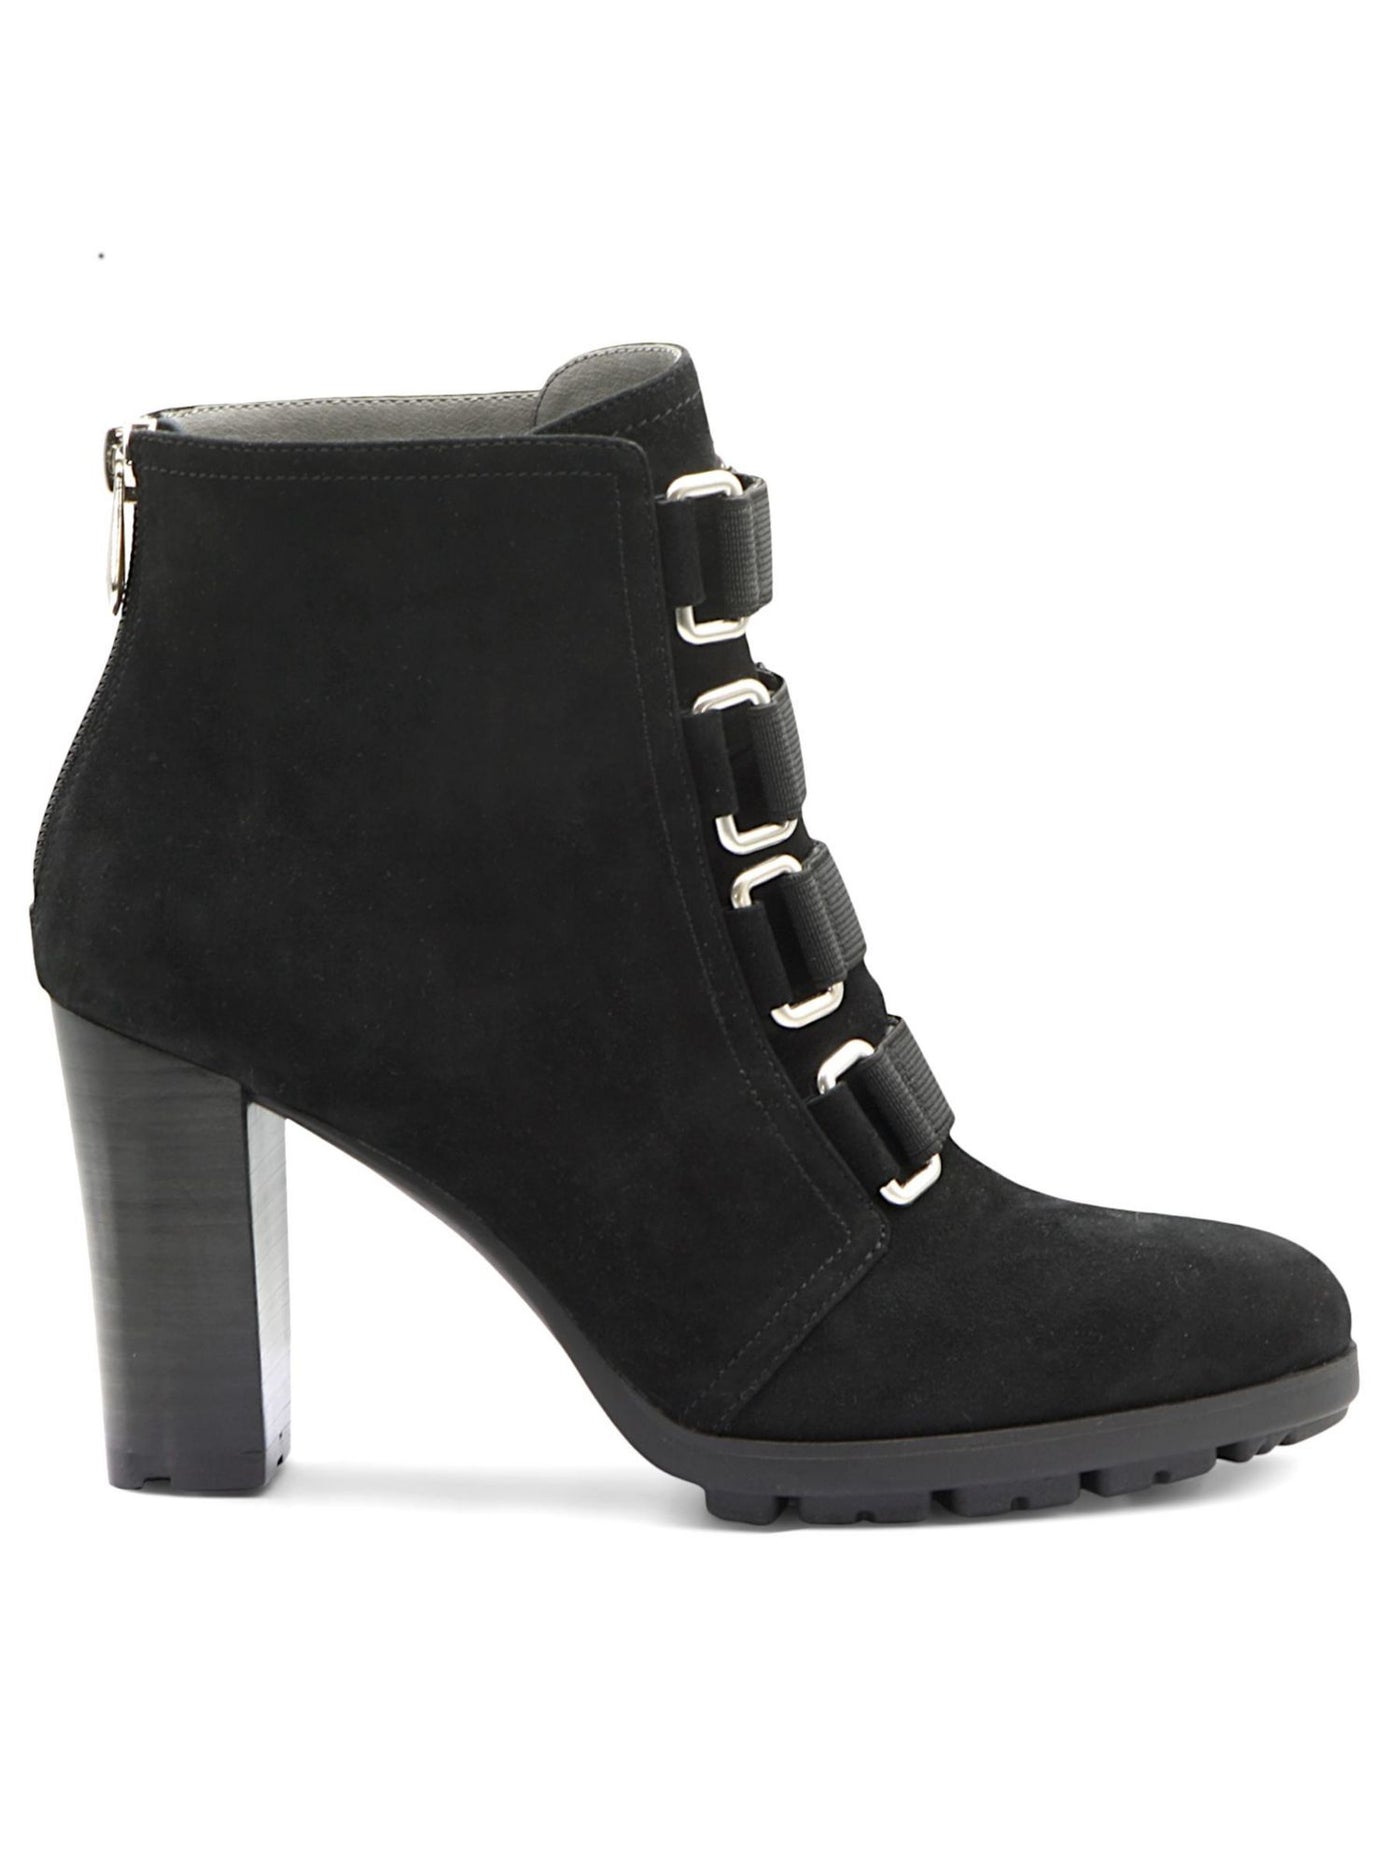 ADRIENNE VITTADINI Womens Black Almond Toe Block Heel Zip-Up Leather Heeled Boots 10 M